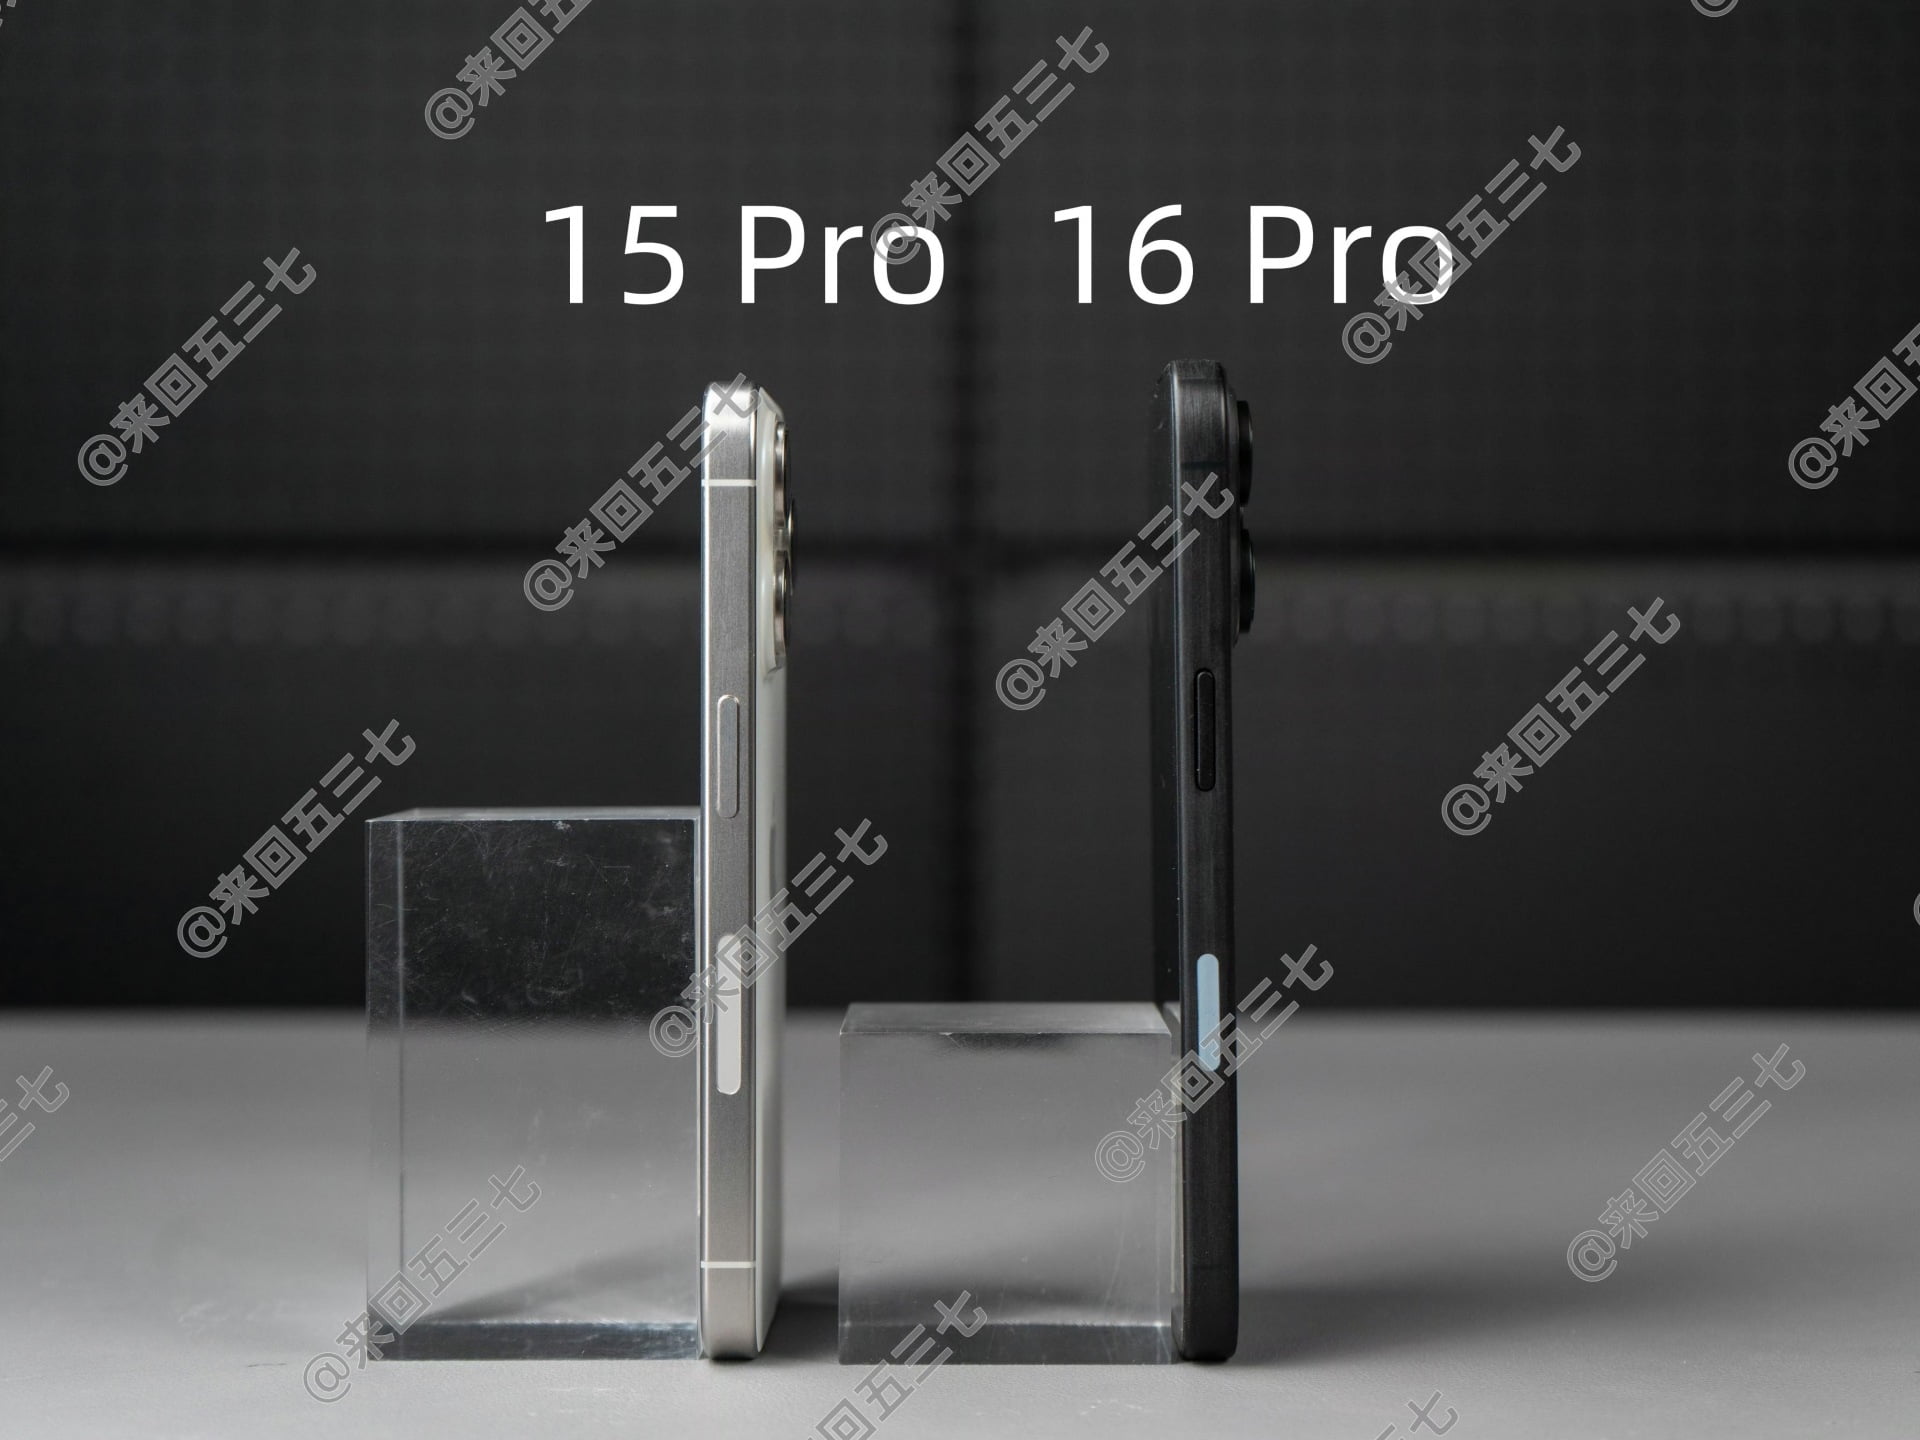 iPhone 16 Pro ve iPhone 15 Pro 4